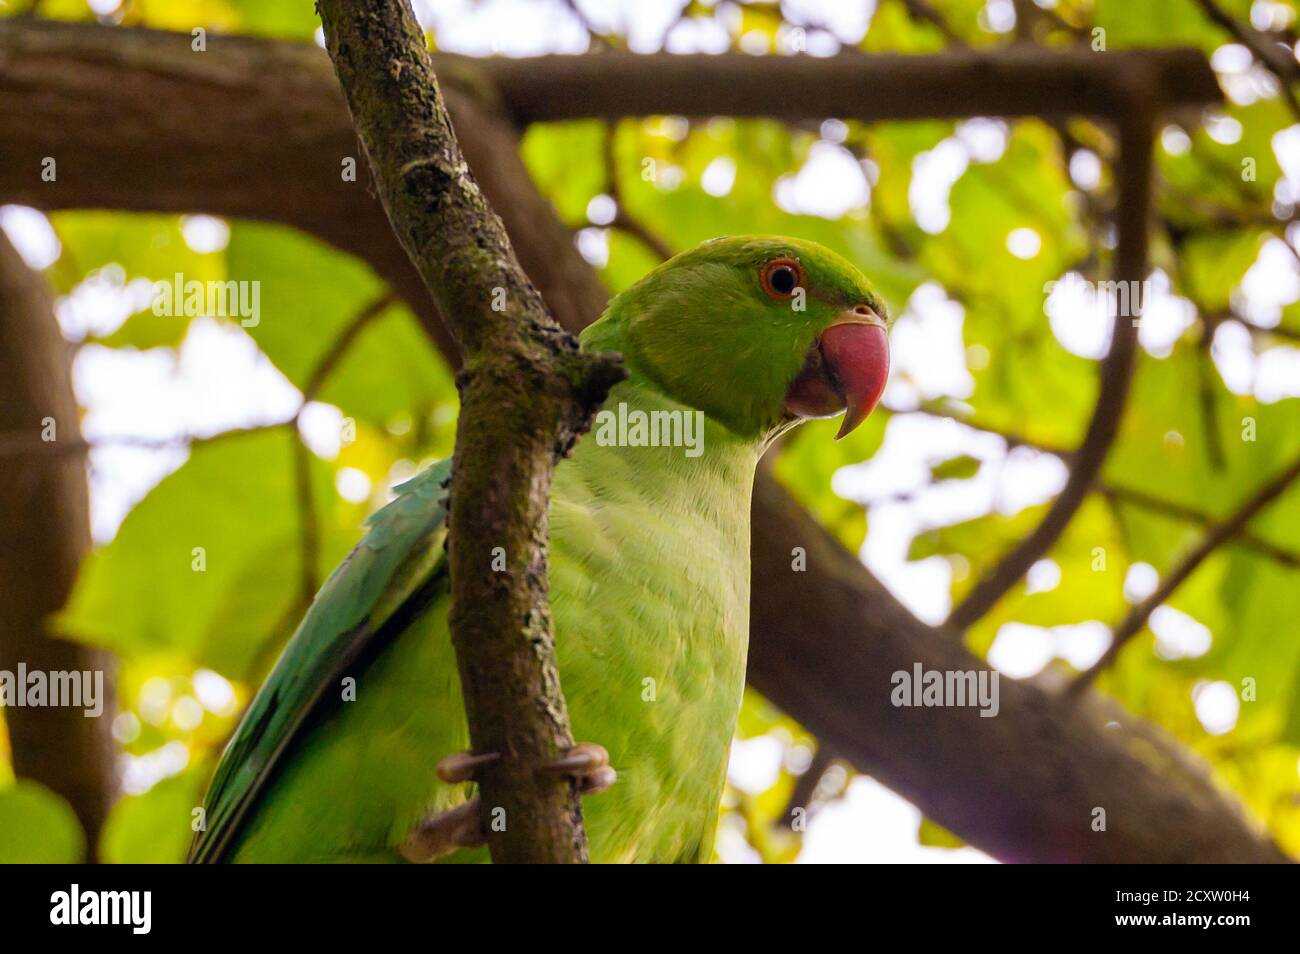 Wild British green parakeet parrot bird siting on the tree Stock Photo